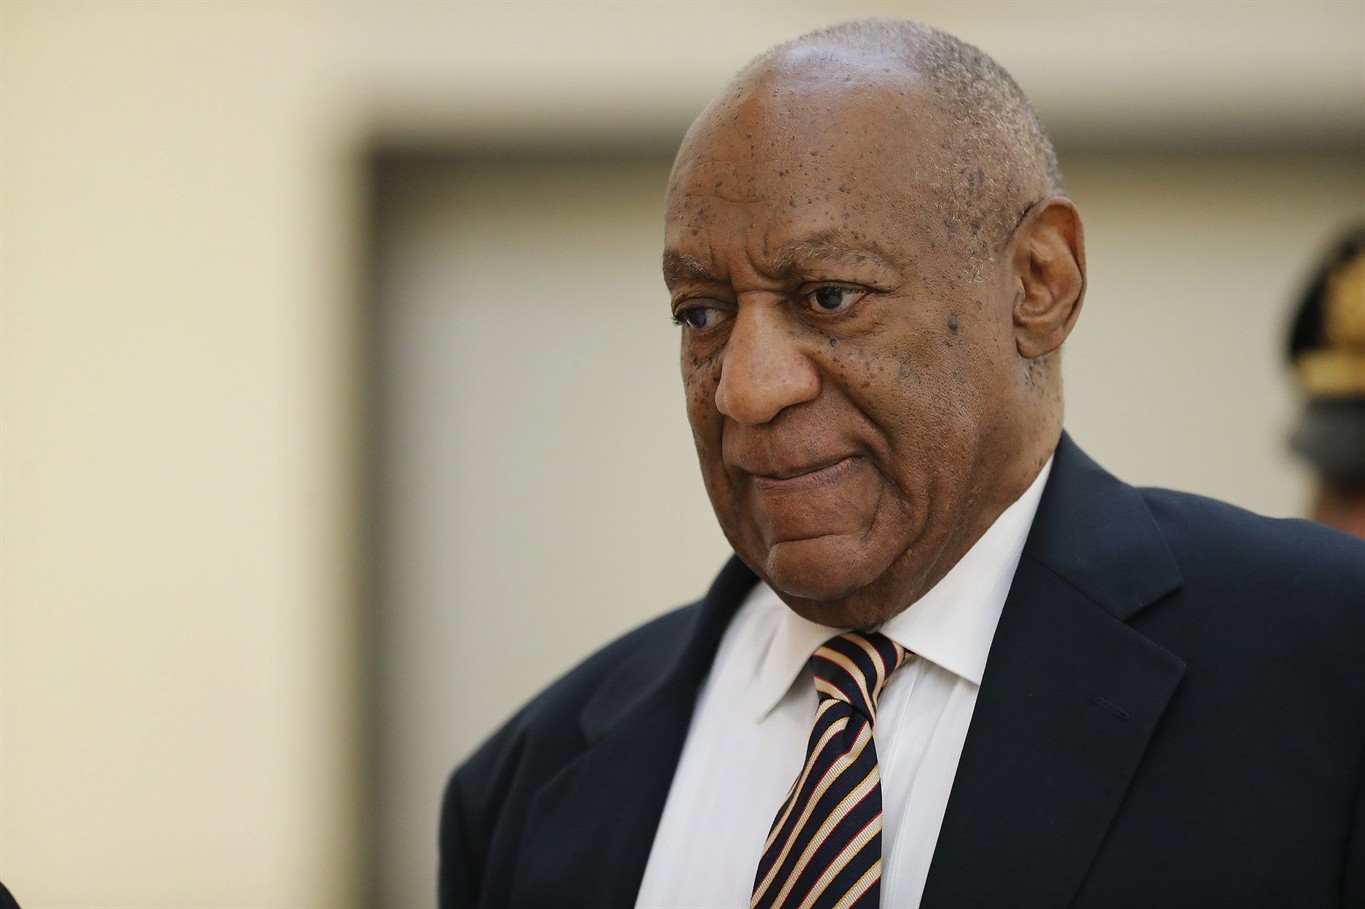 Bill Cosby's sexual assault trial begins in Pennsylvania